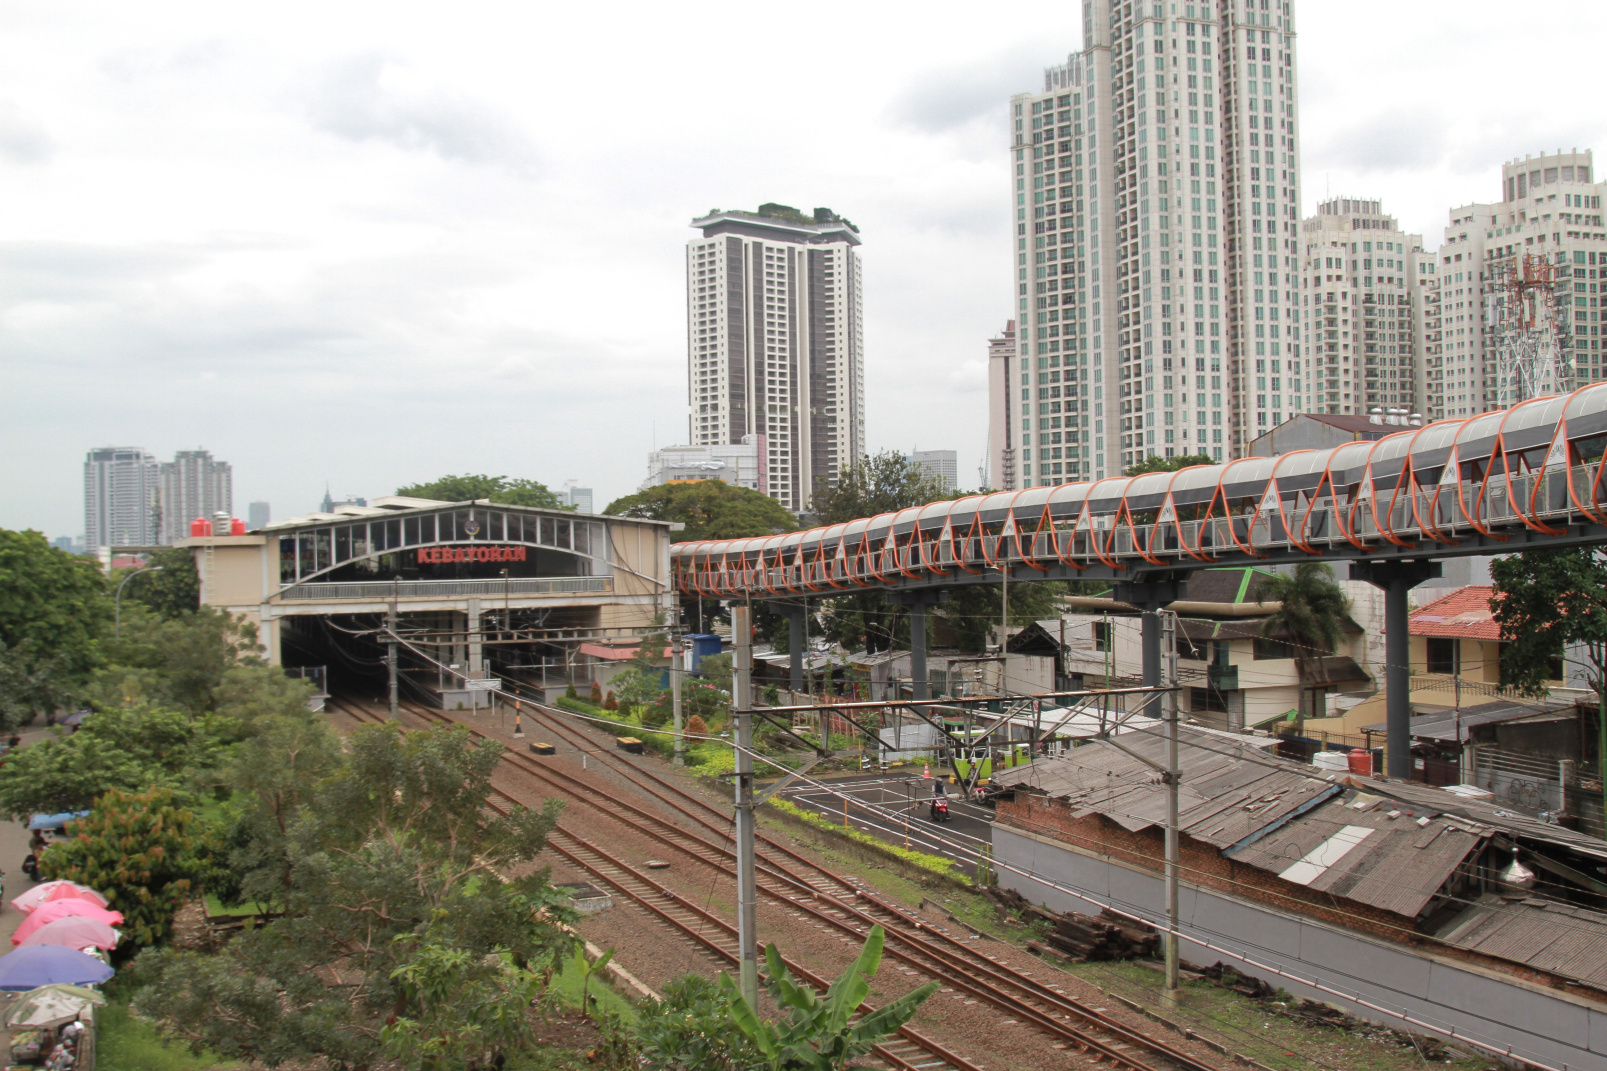 Pembangunan Skywalk Kebayoran Lama telah selesai dan segera diresmikan pekan depan (Ashar/SinPo.id)